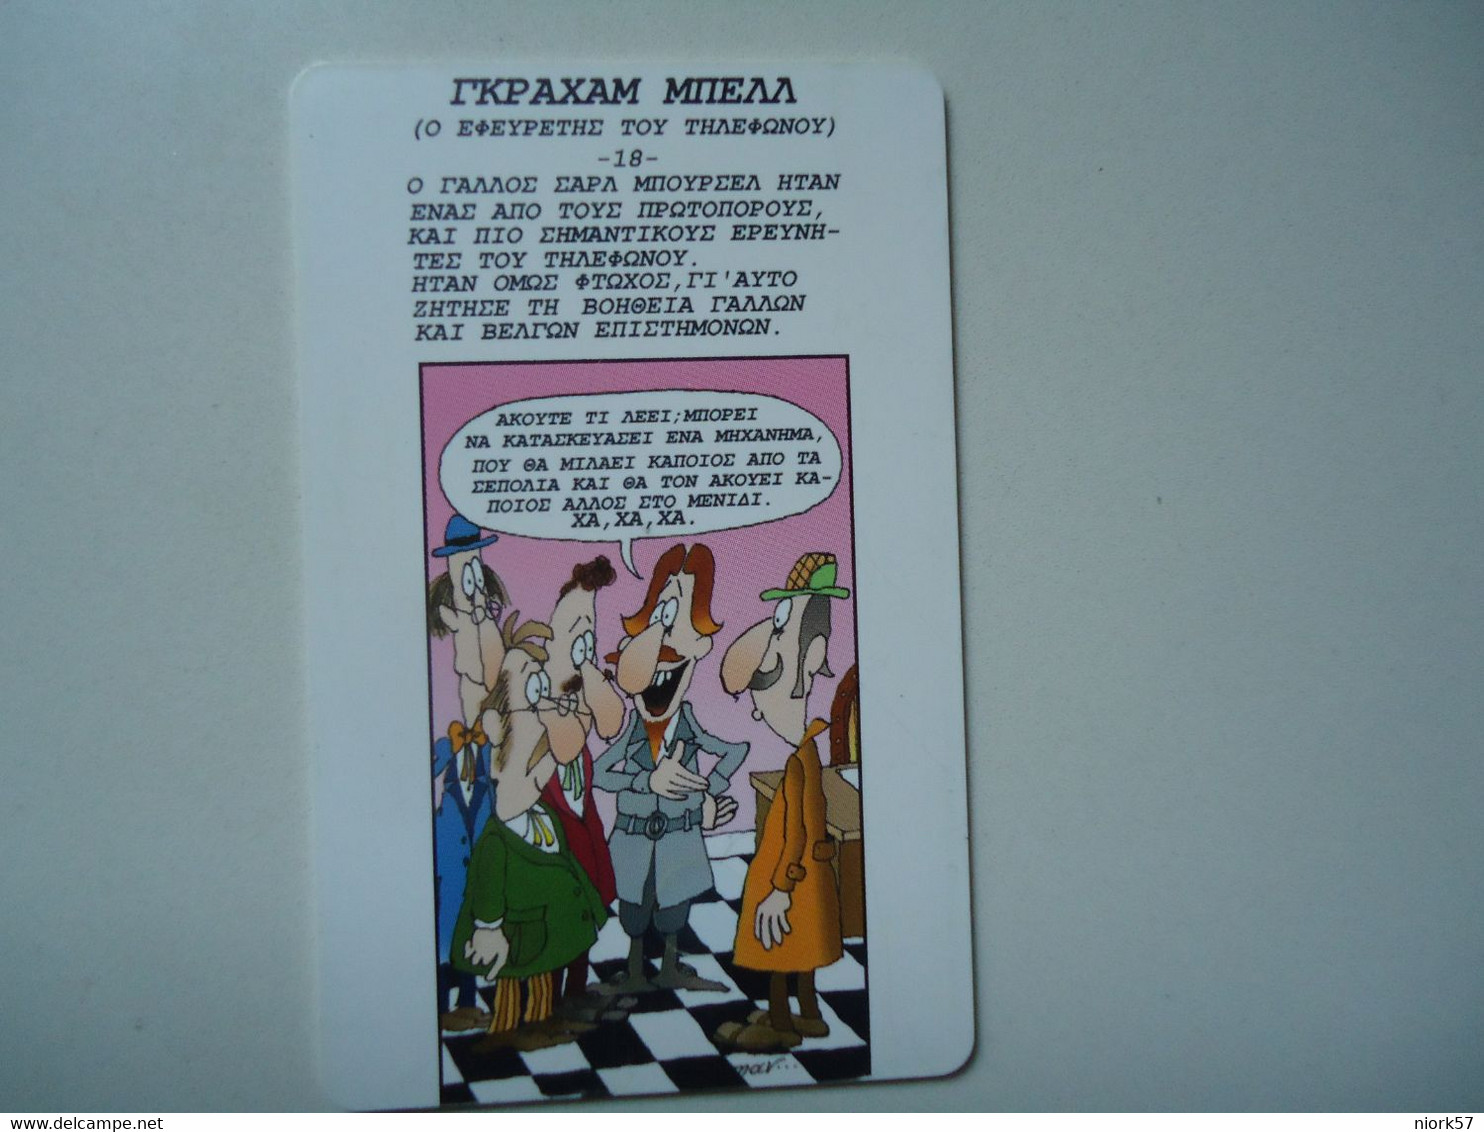 GREECE USED CARDS LOW TIRAGE COMICS GRAHAM BELL TELEPHONES - Téléphones